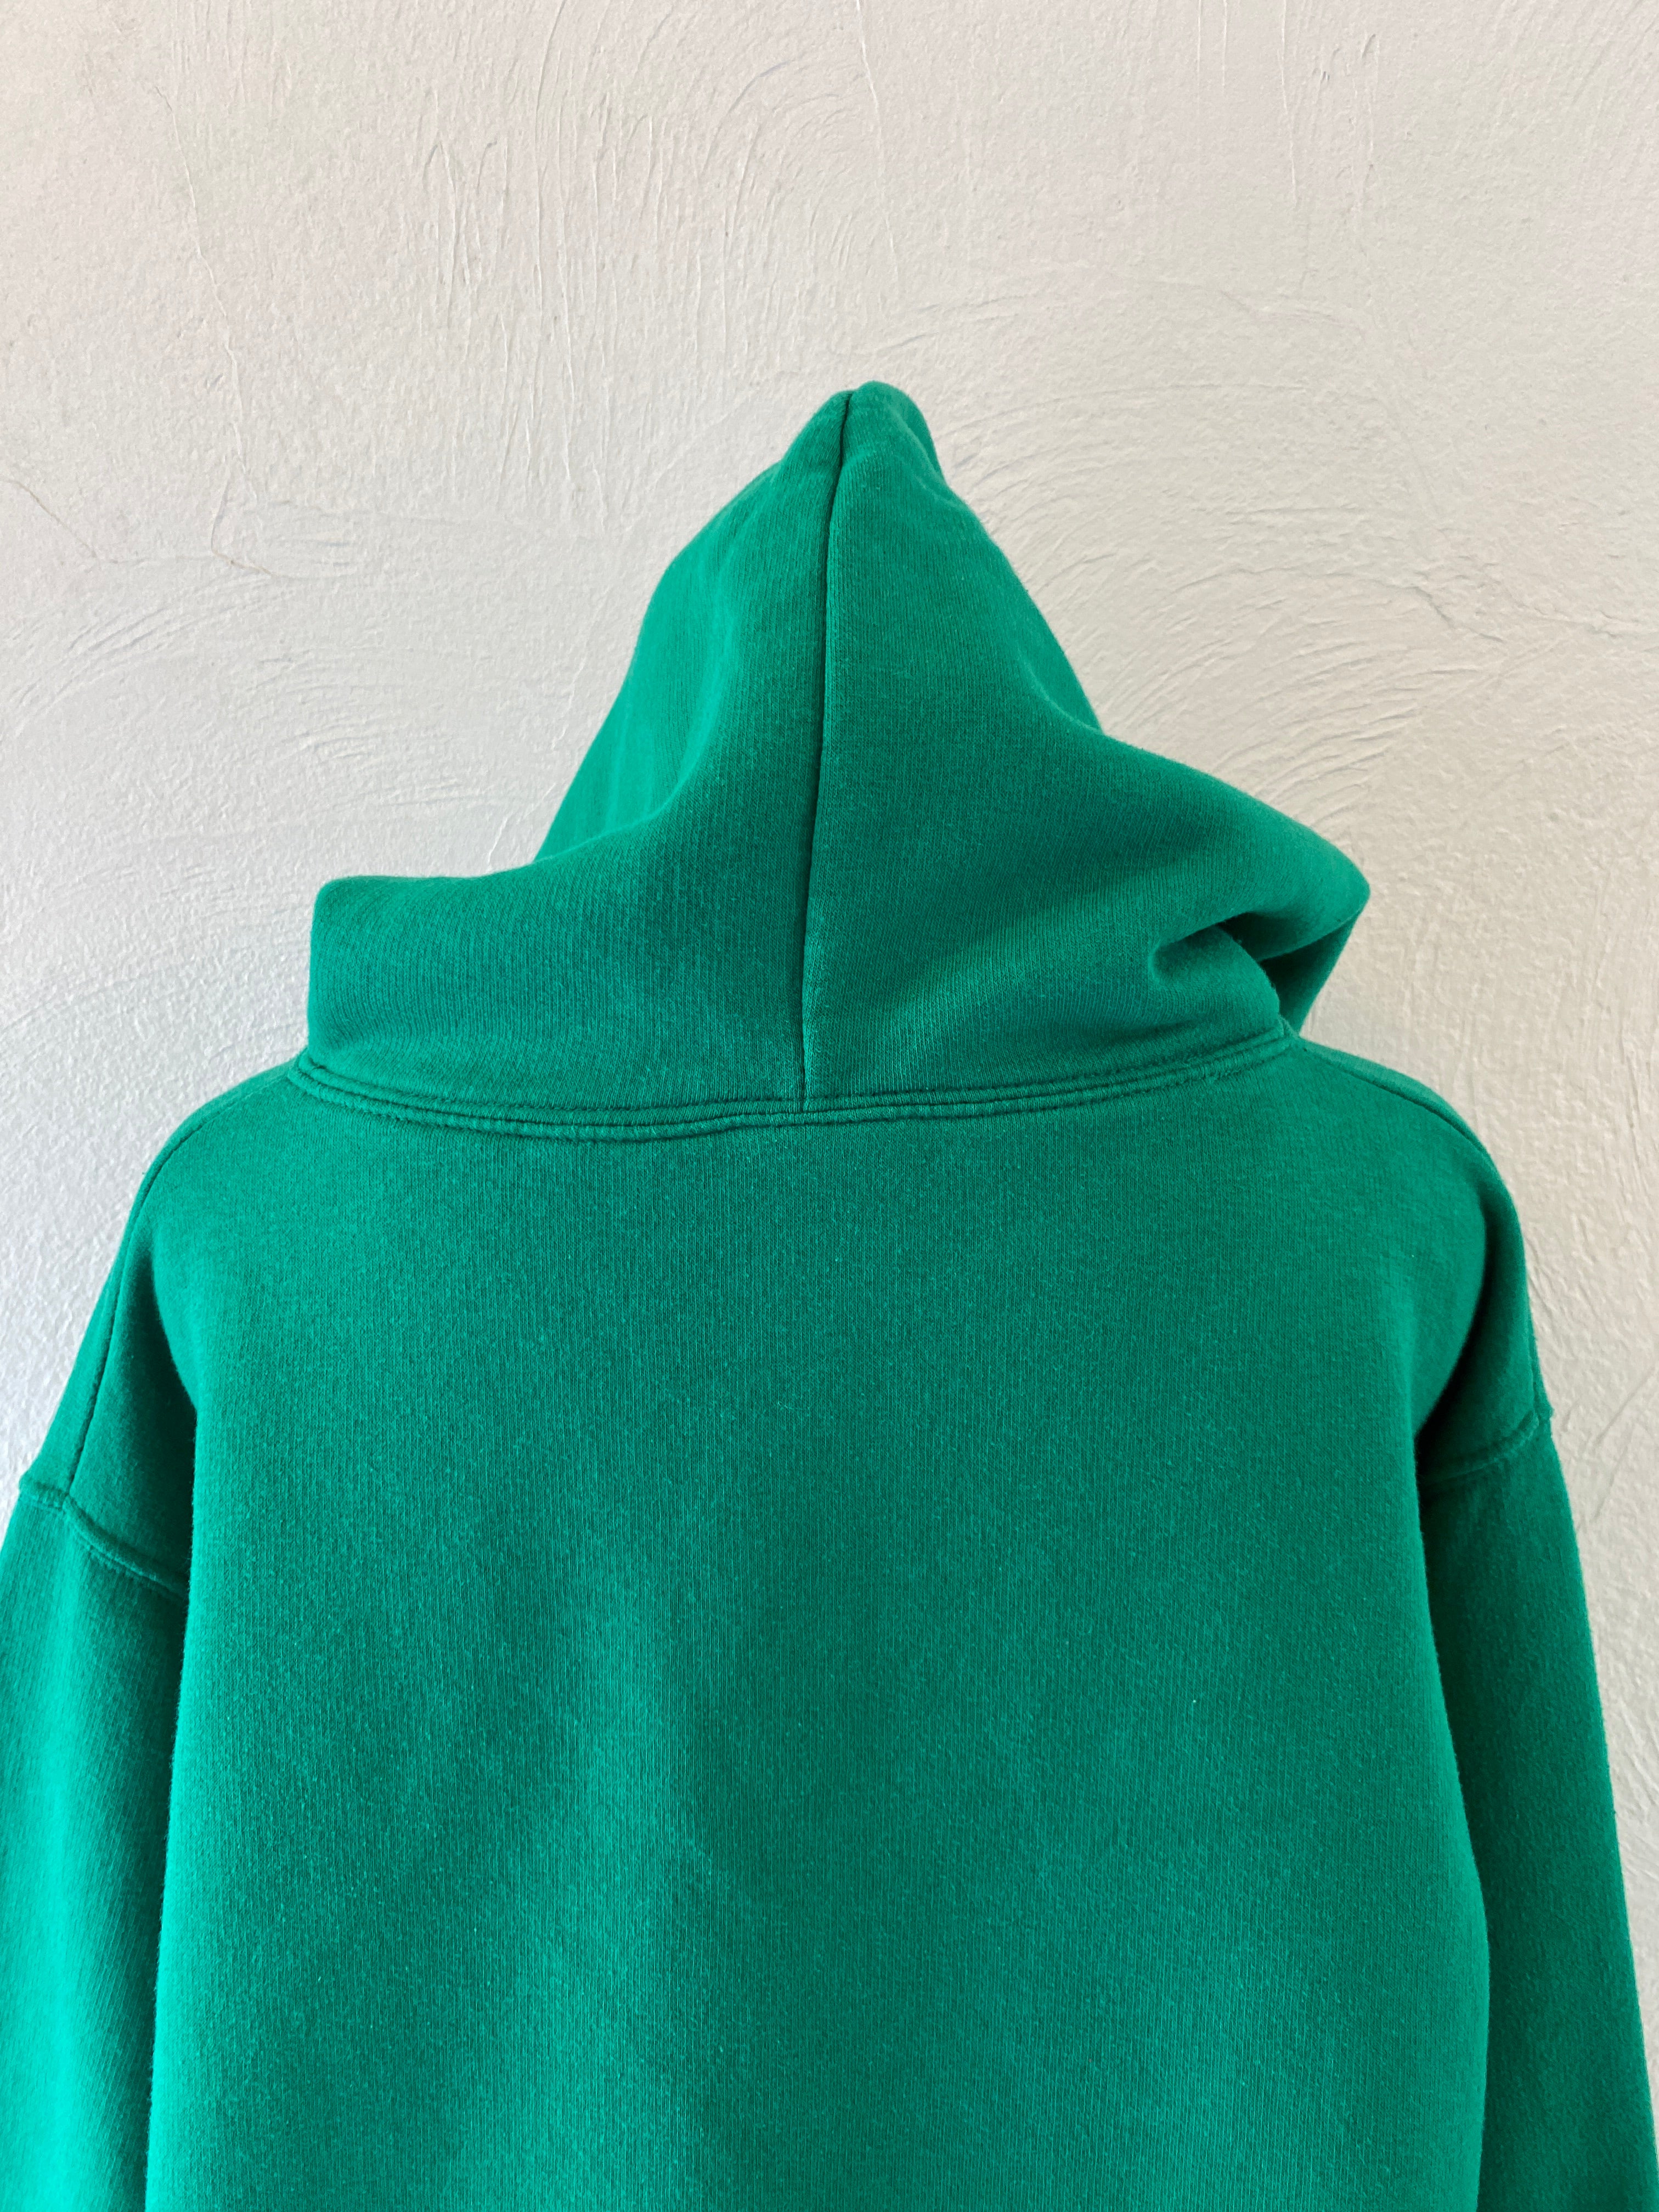 green hooded sweat